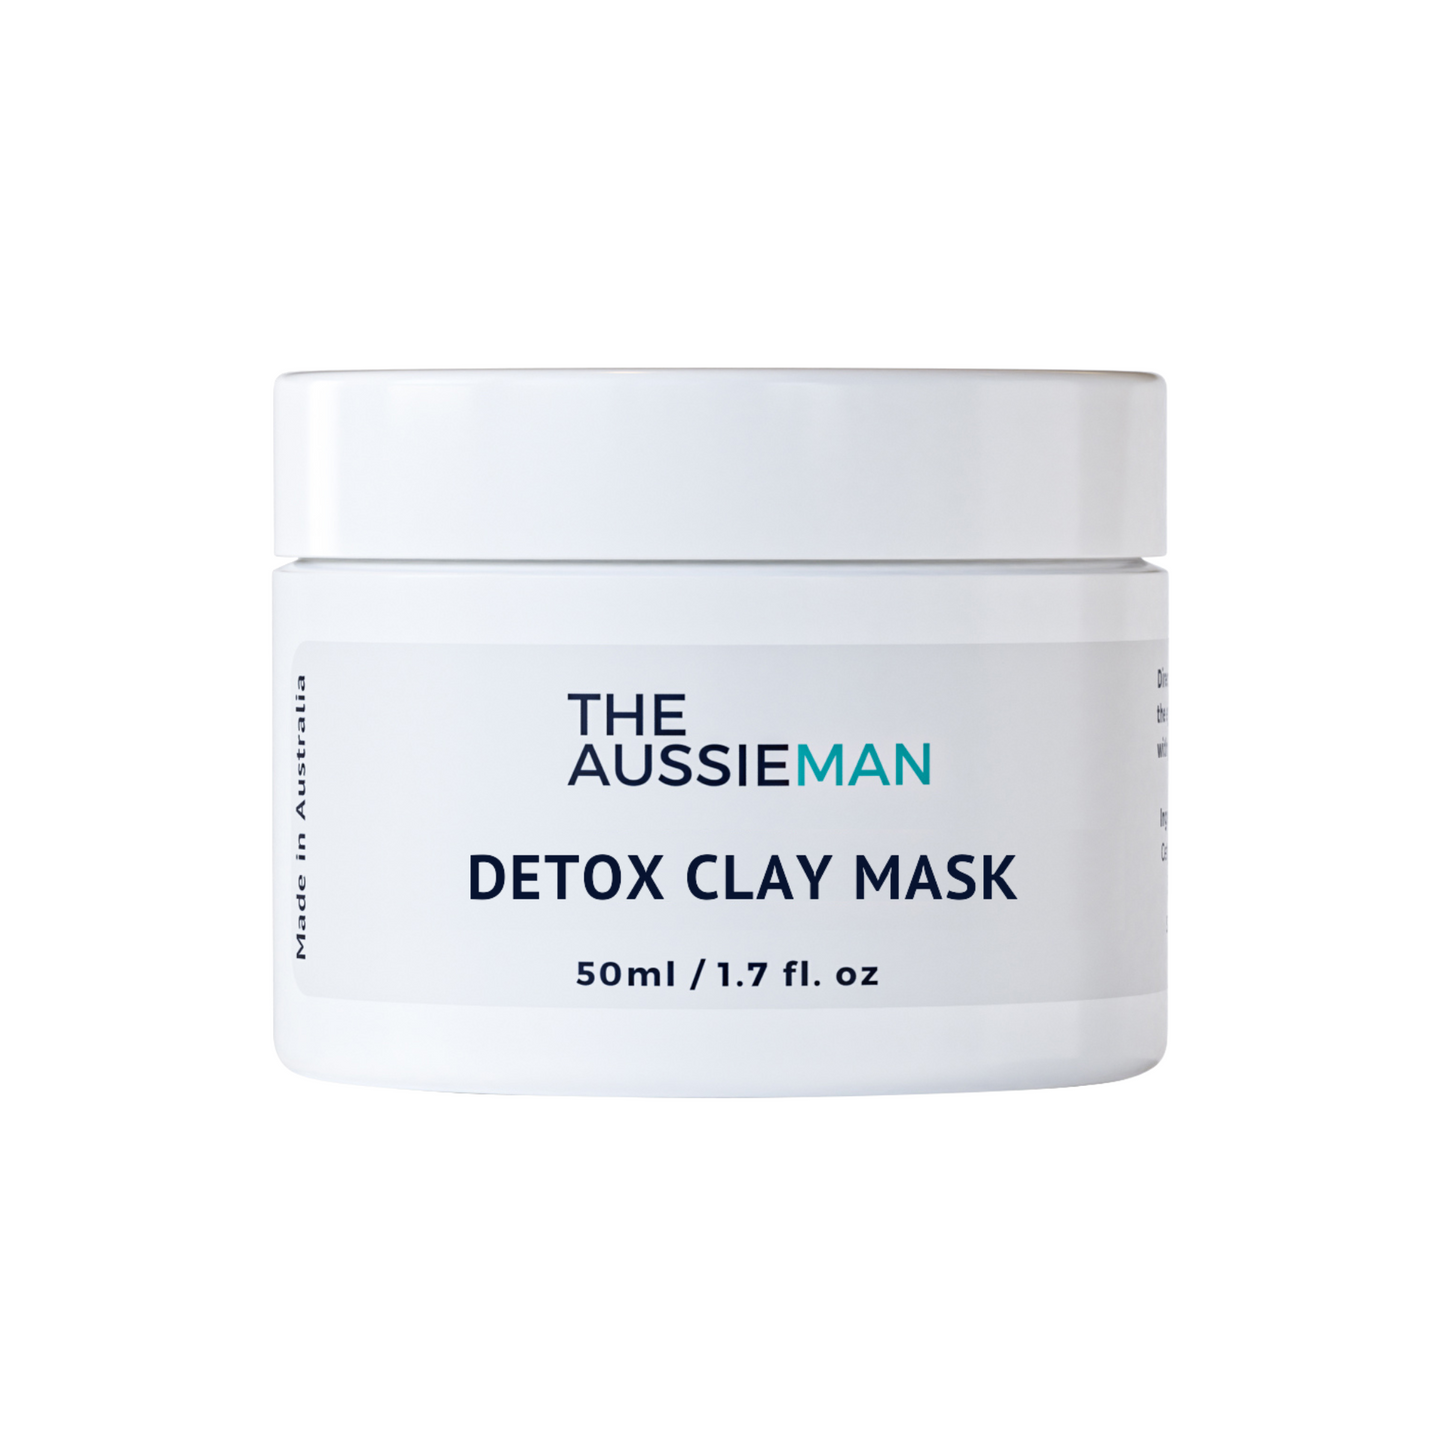 Detox Clay Mask